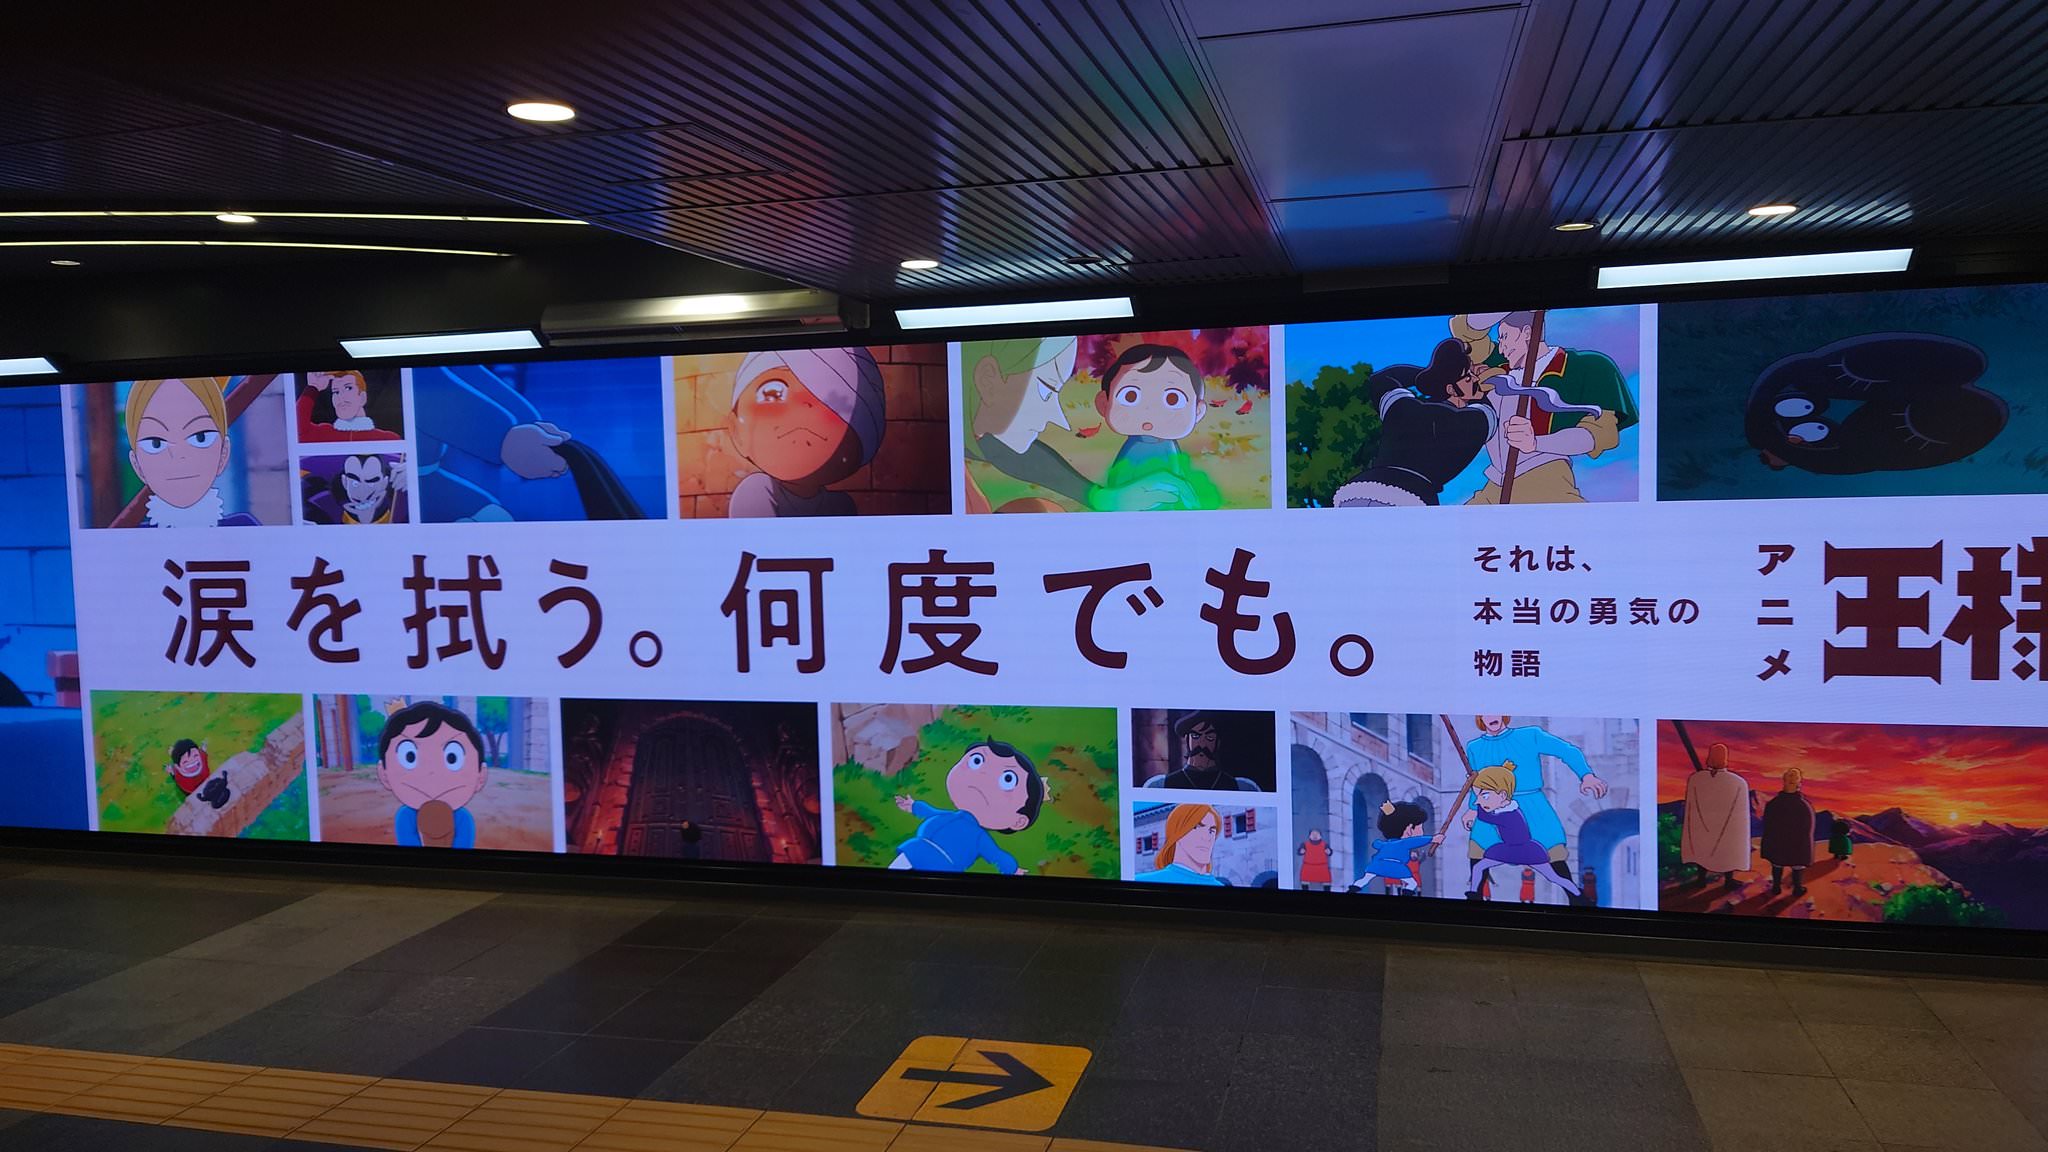 TVアニメ「王様ランキング」広告が涙する!? 大型広告 渋谷駅に掲出!